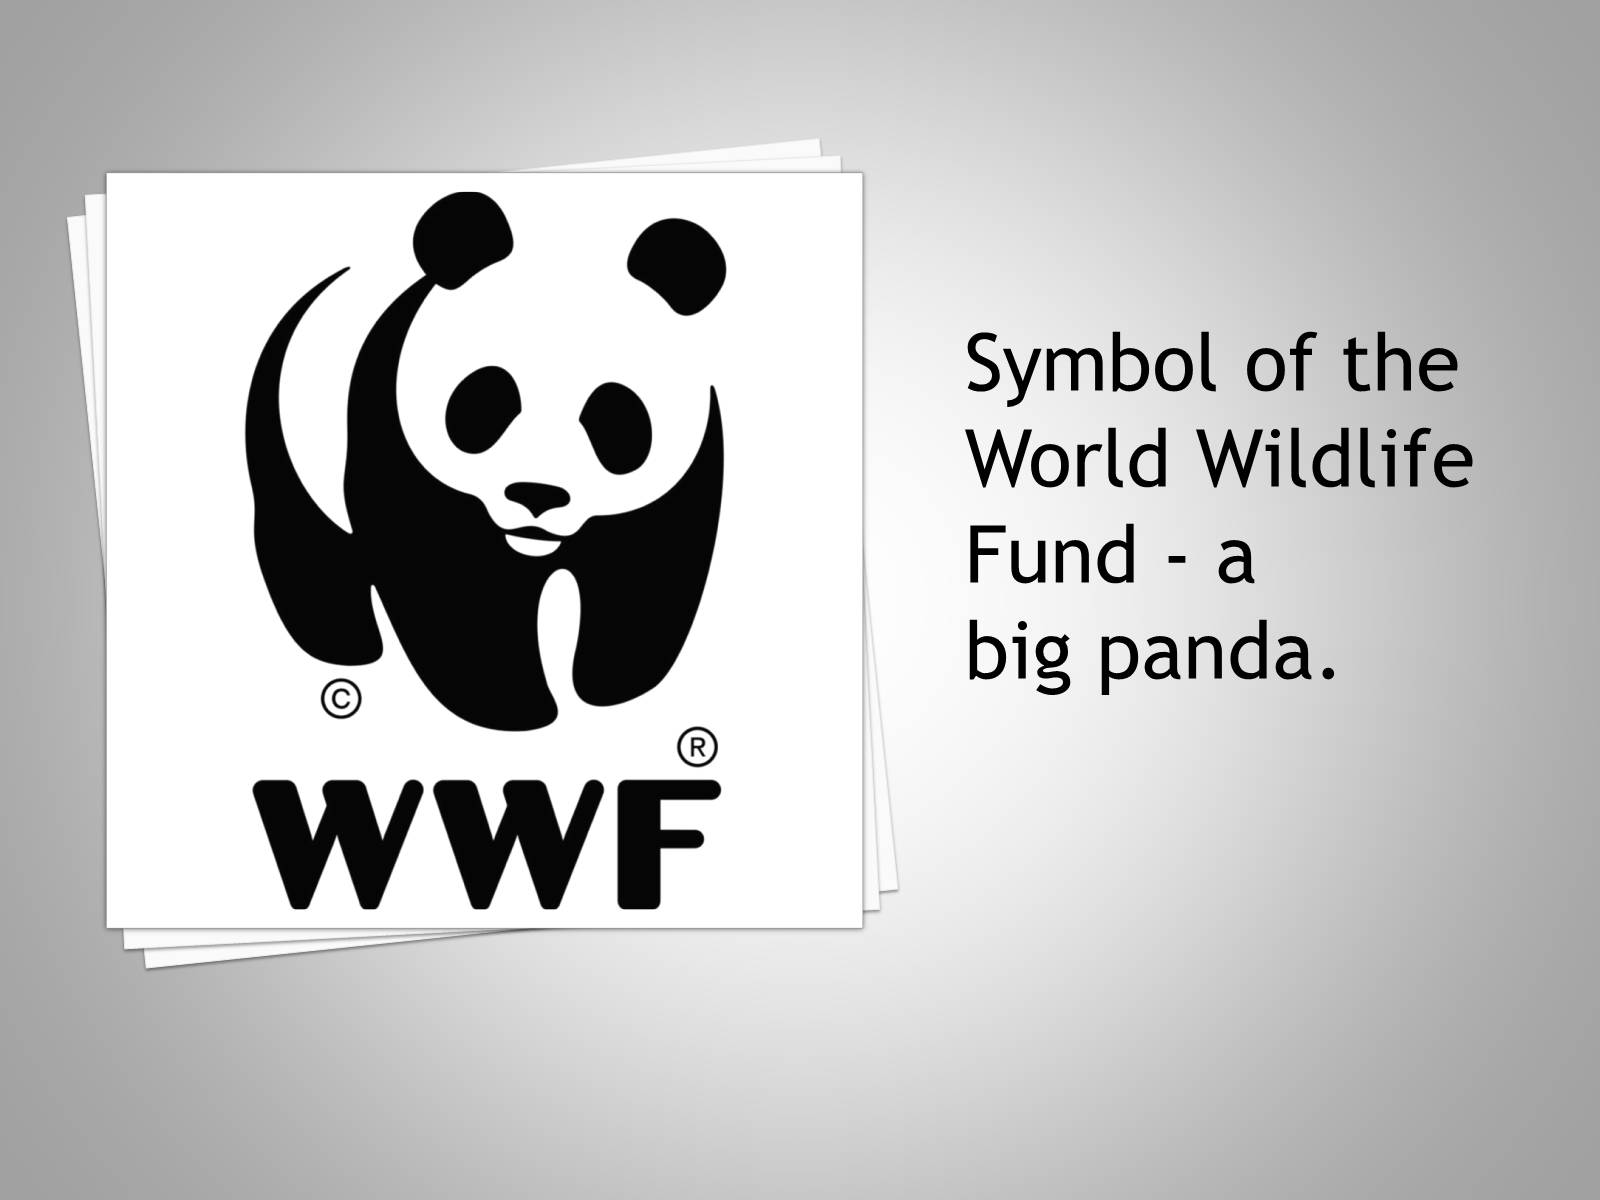 The world wildlife fund is. Всемирный фонд дикой природы WWF России. (Англ. World Wildlife Fund, WWF). The World wide Fund for nature (WWF). Символ WWF.